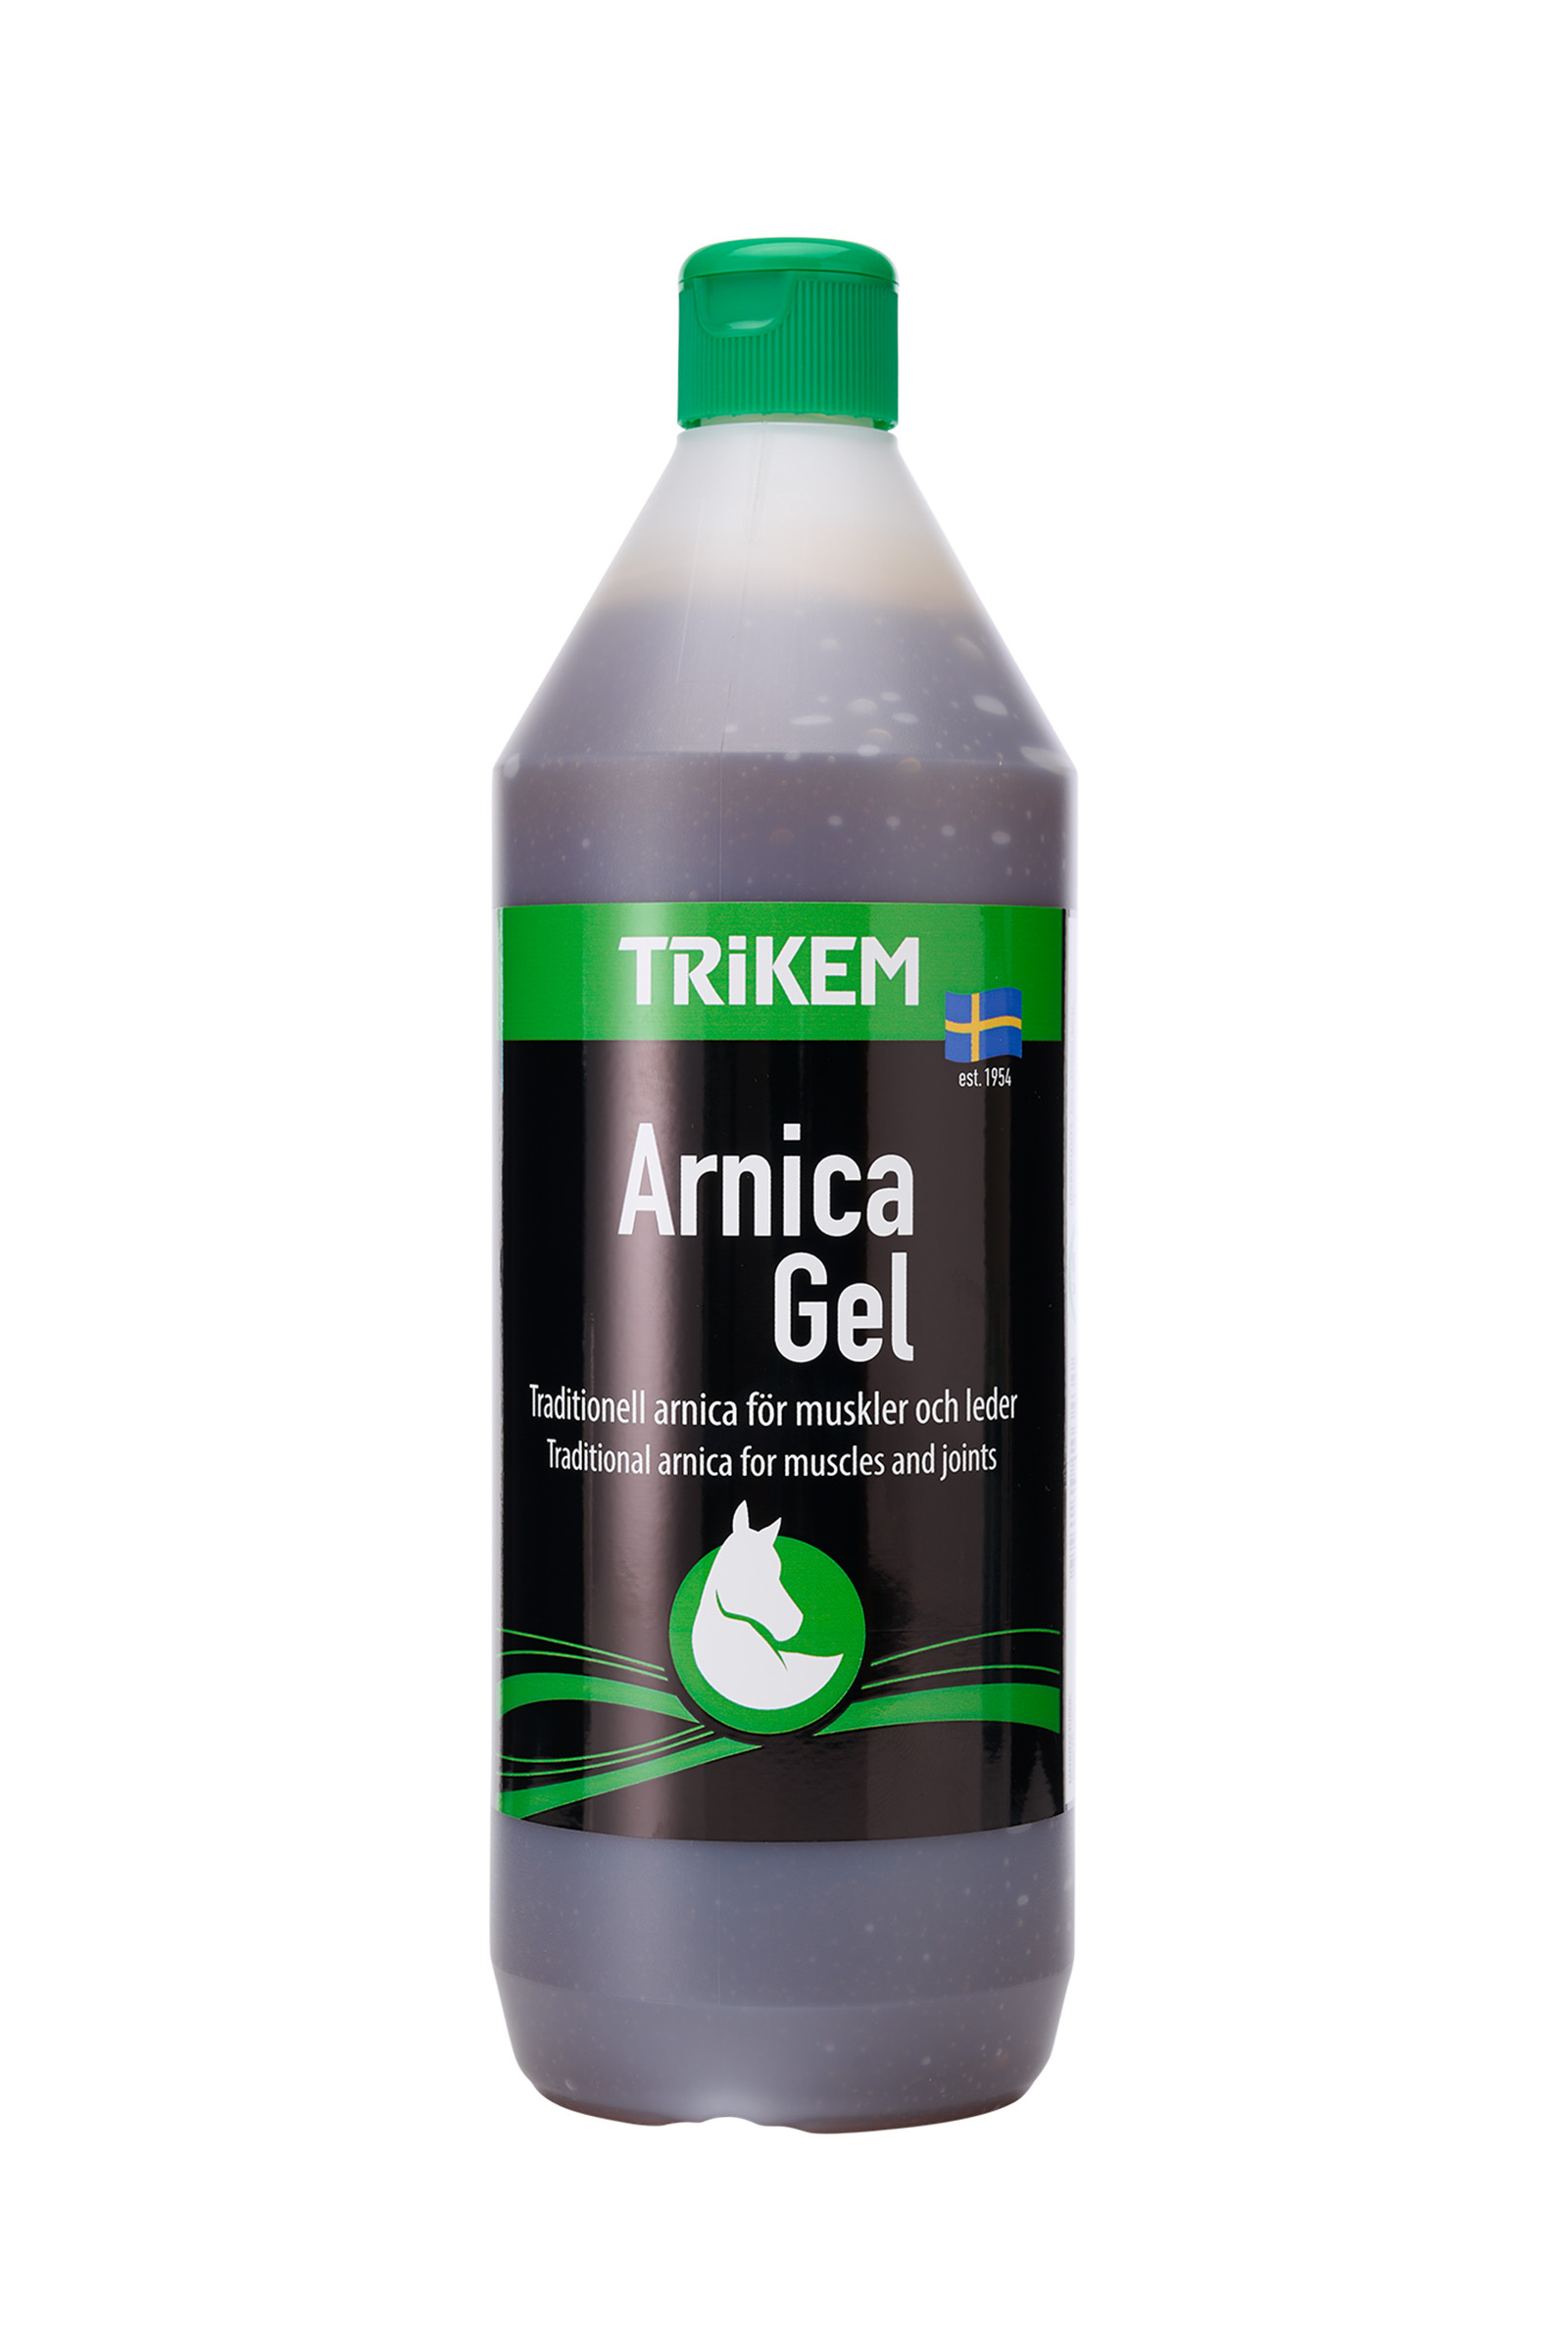 Trikem Paraffin Oil, 250 ml